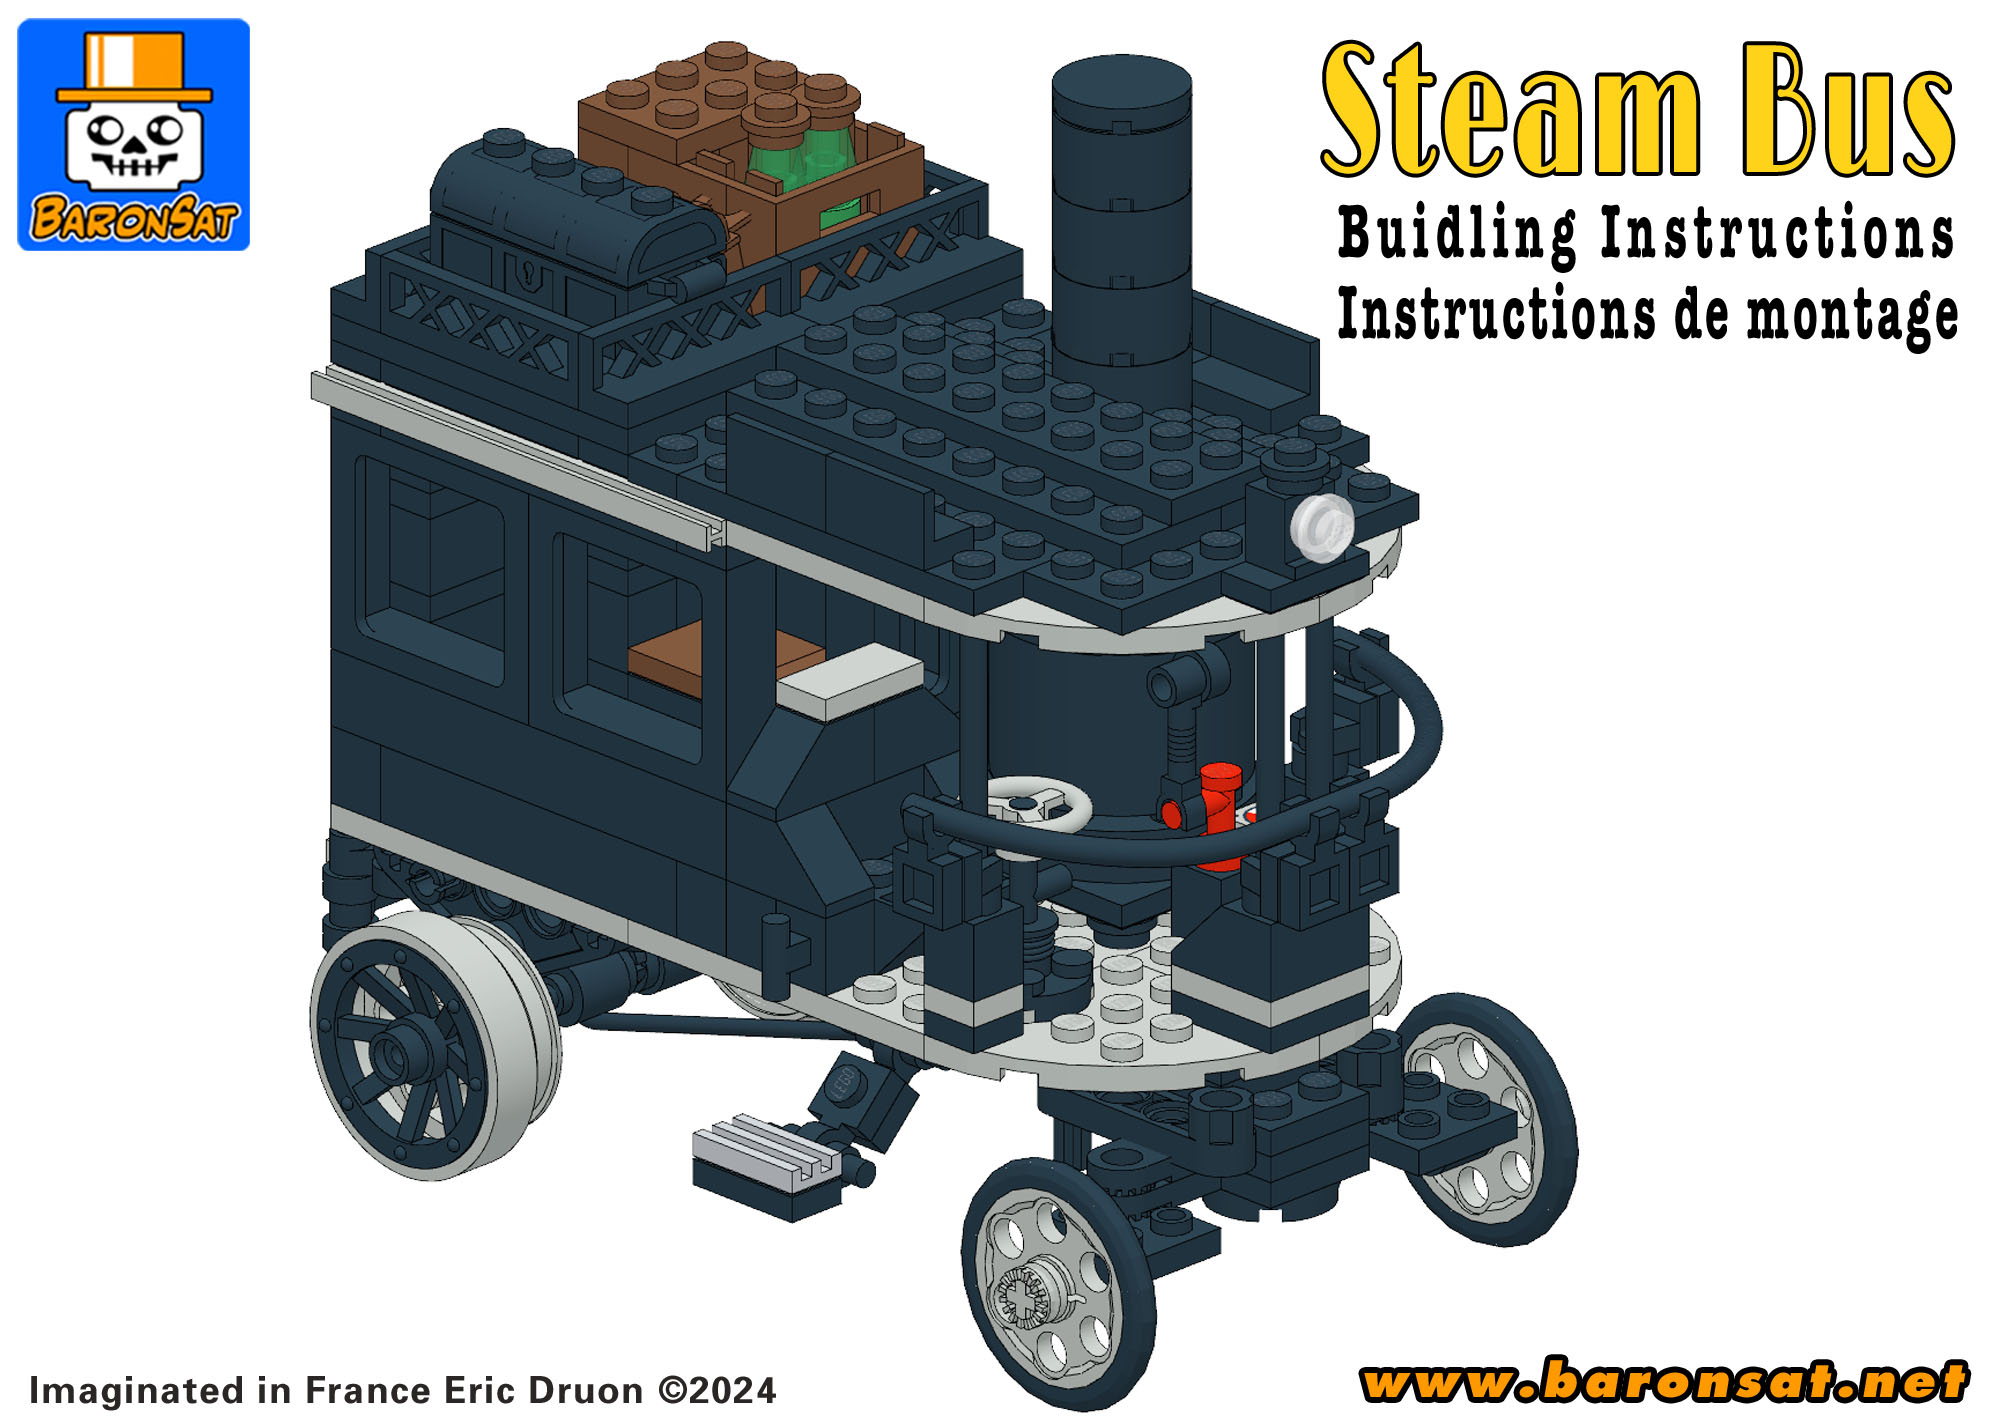 Steam Bus moc model build with Lego bricks Instructions sample